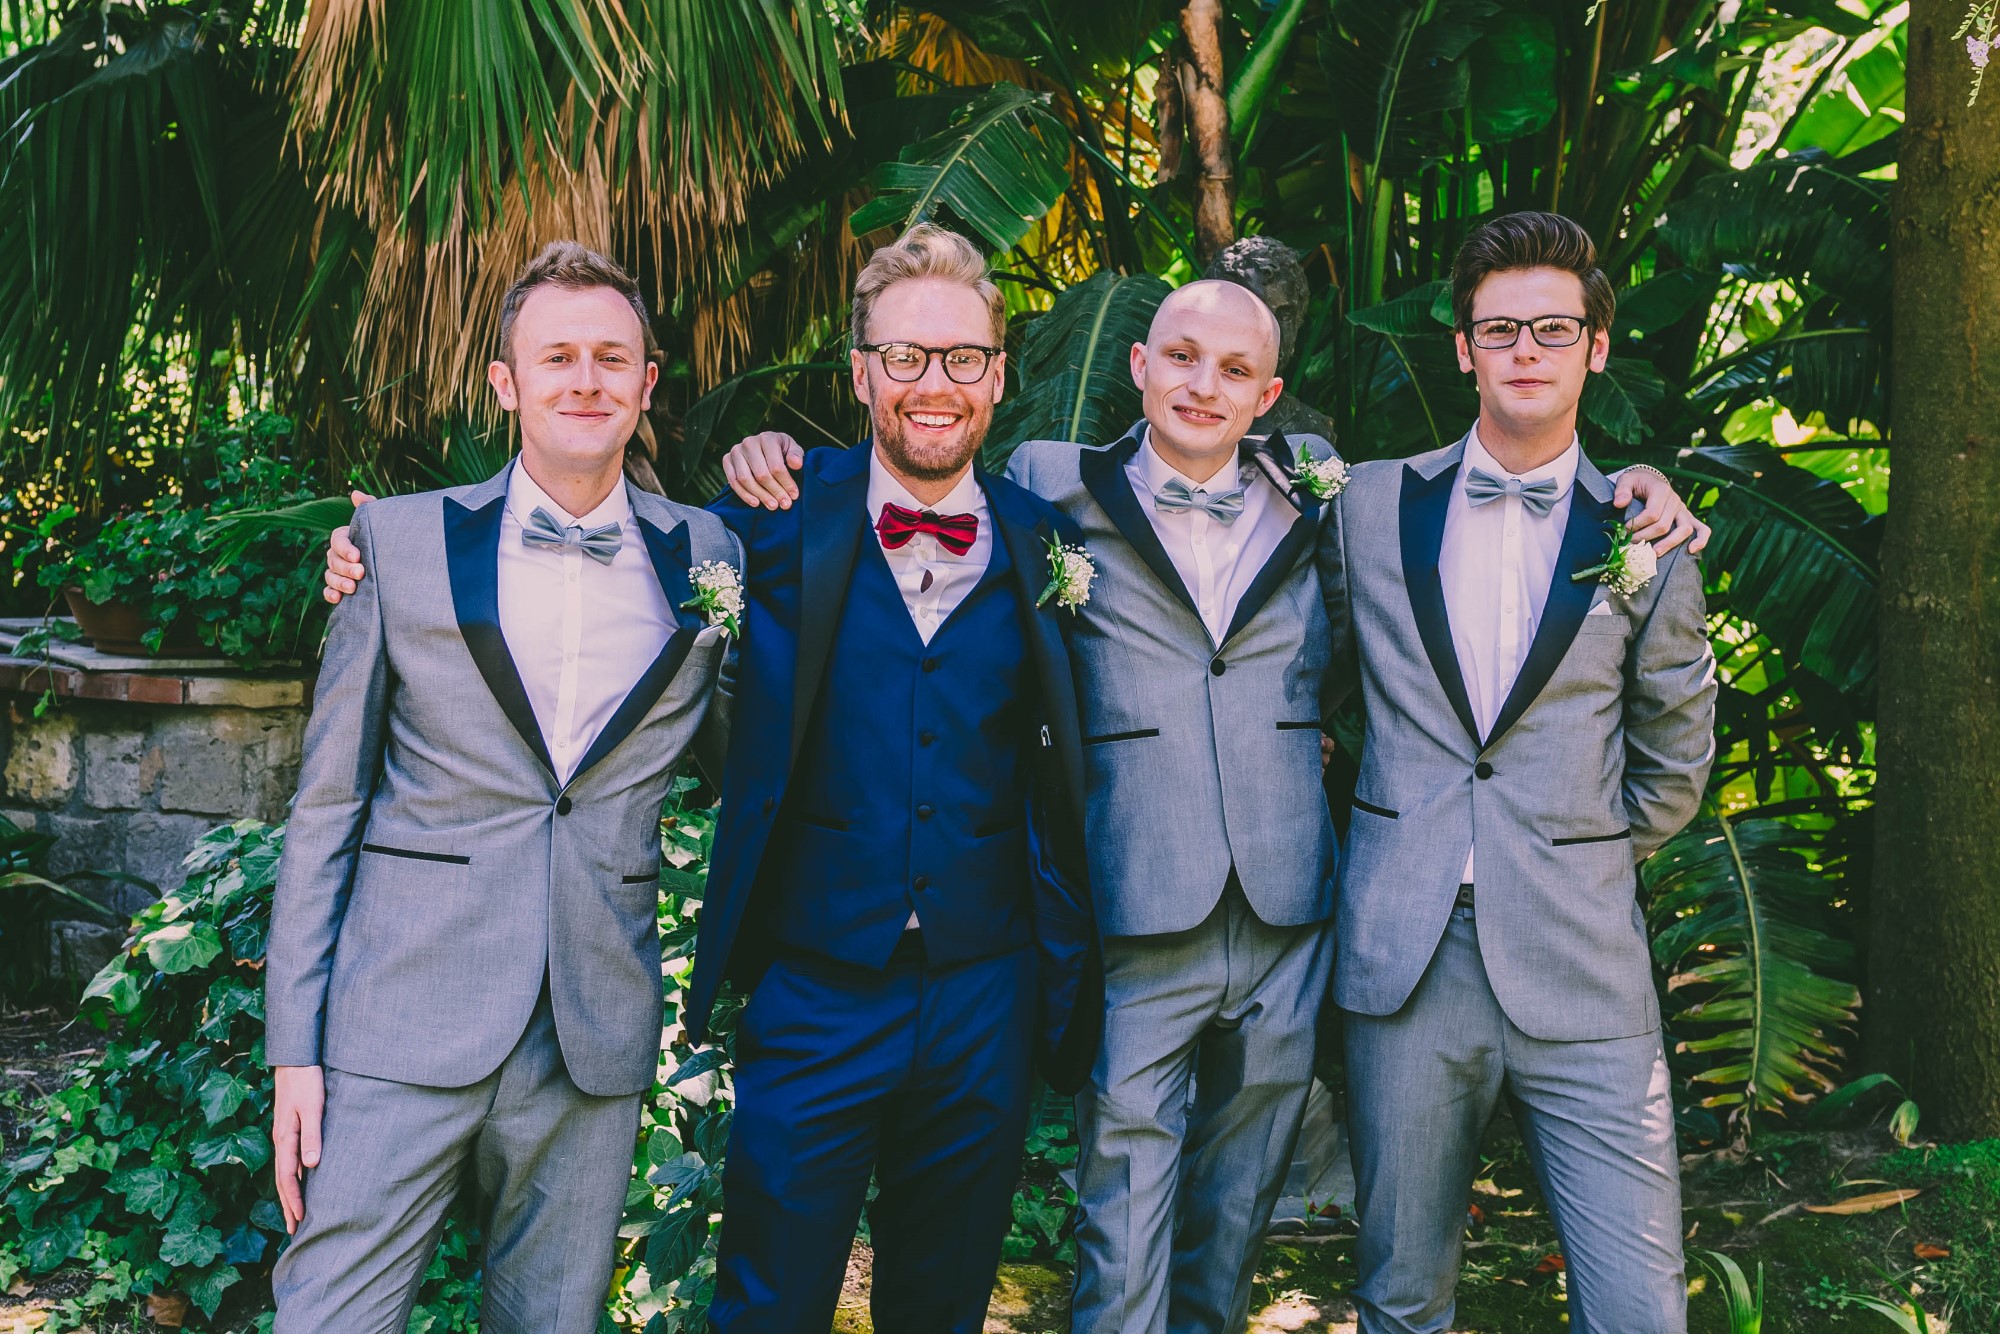 01 Groom in blue and groomsmen in pale grey and bow ties